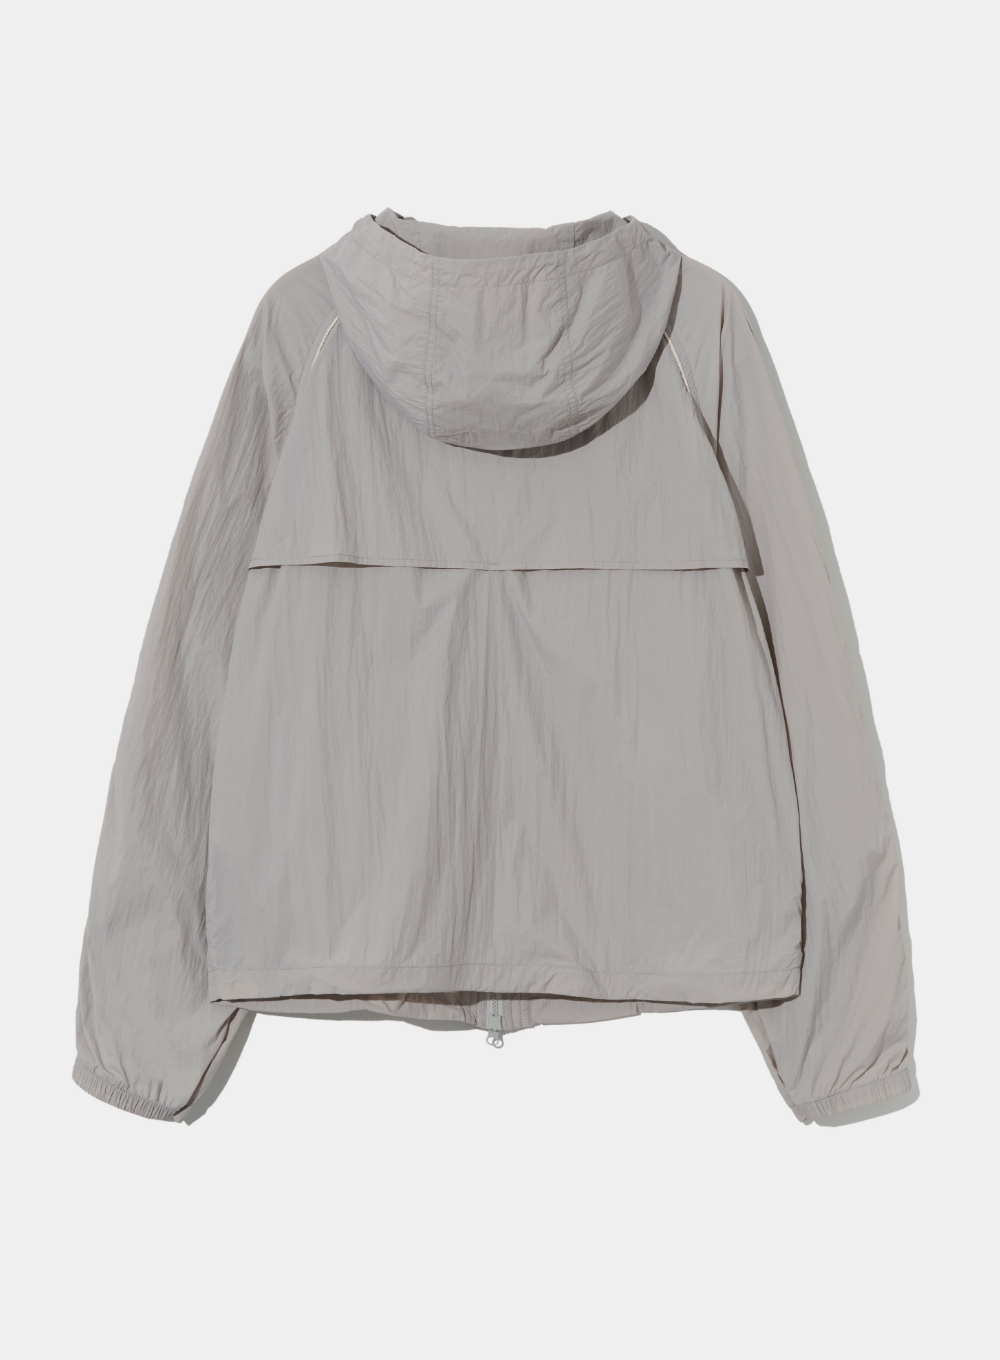 Parasail Hood Zip-up Jacket - Utility Gray